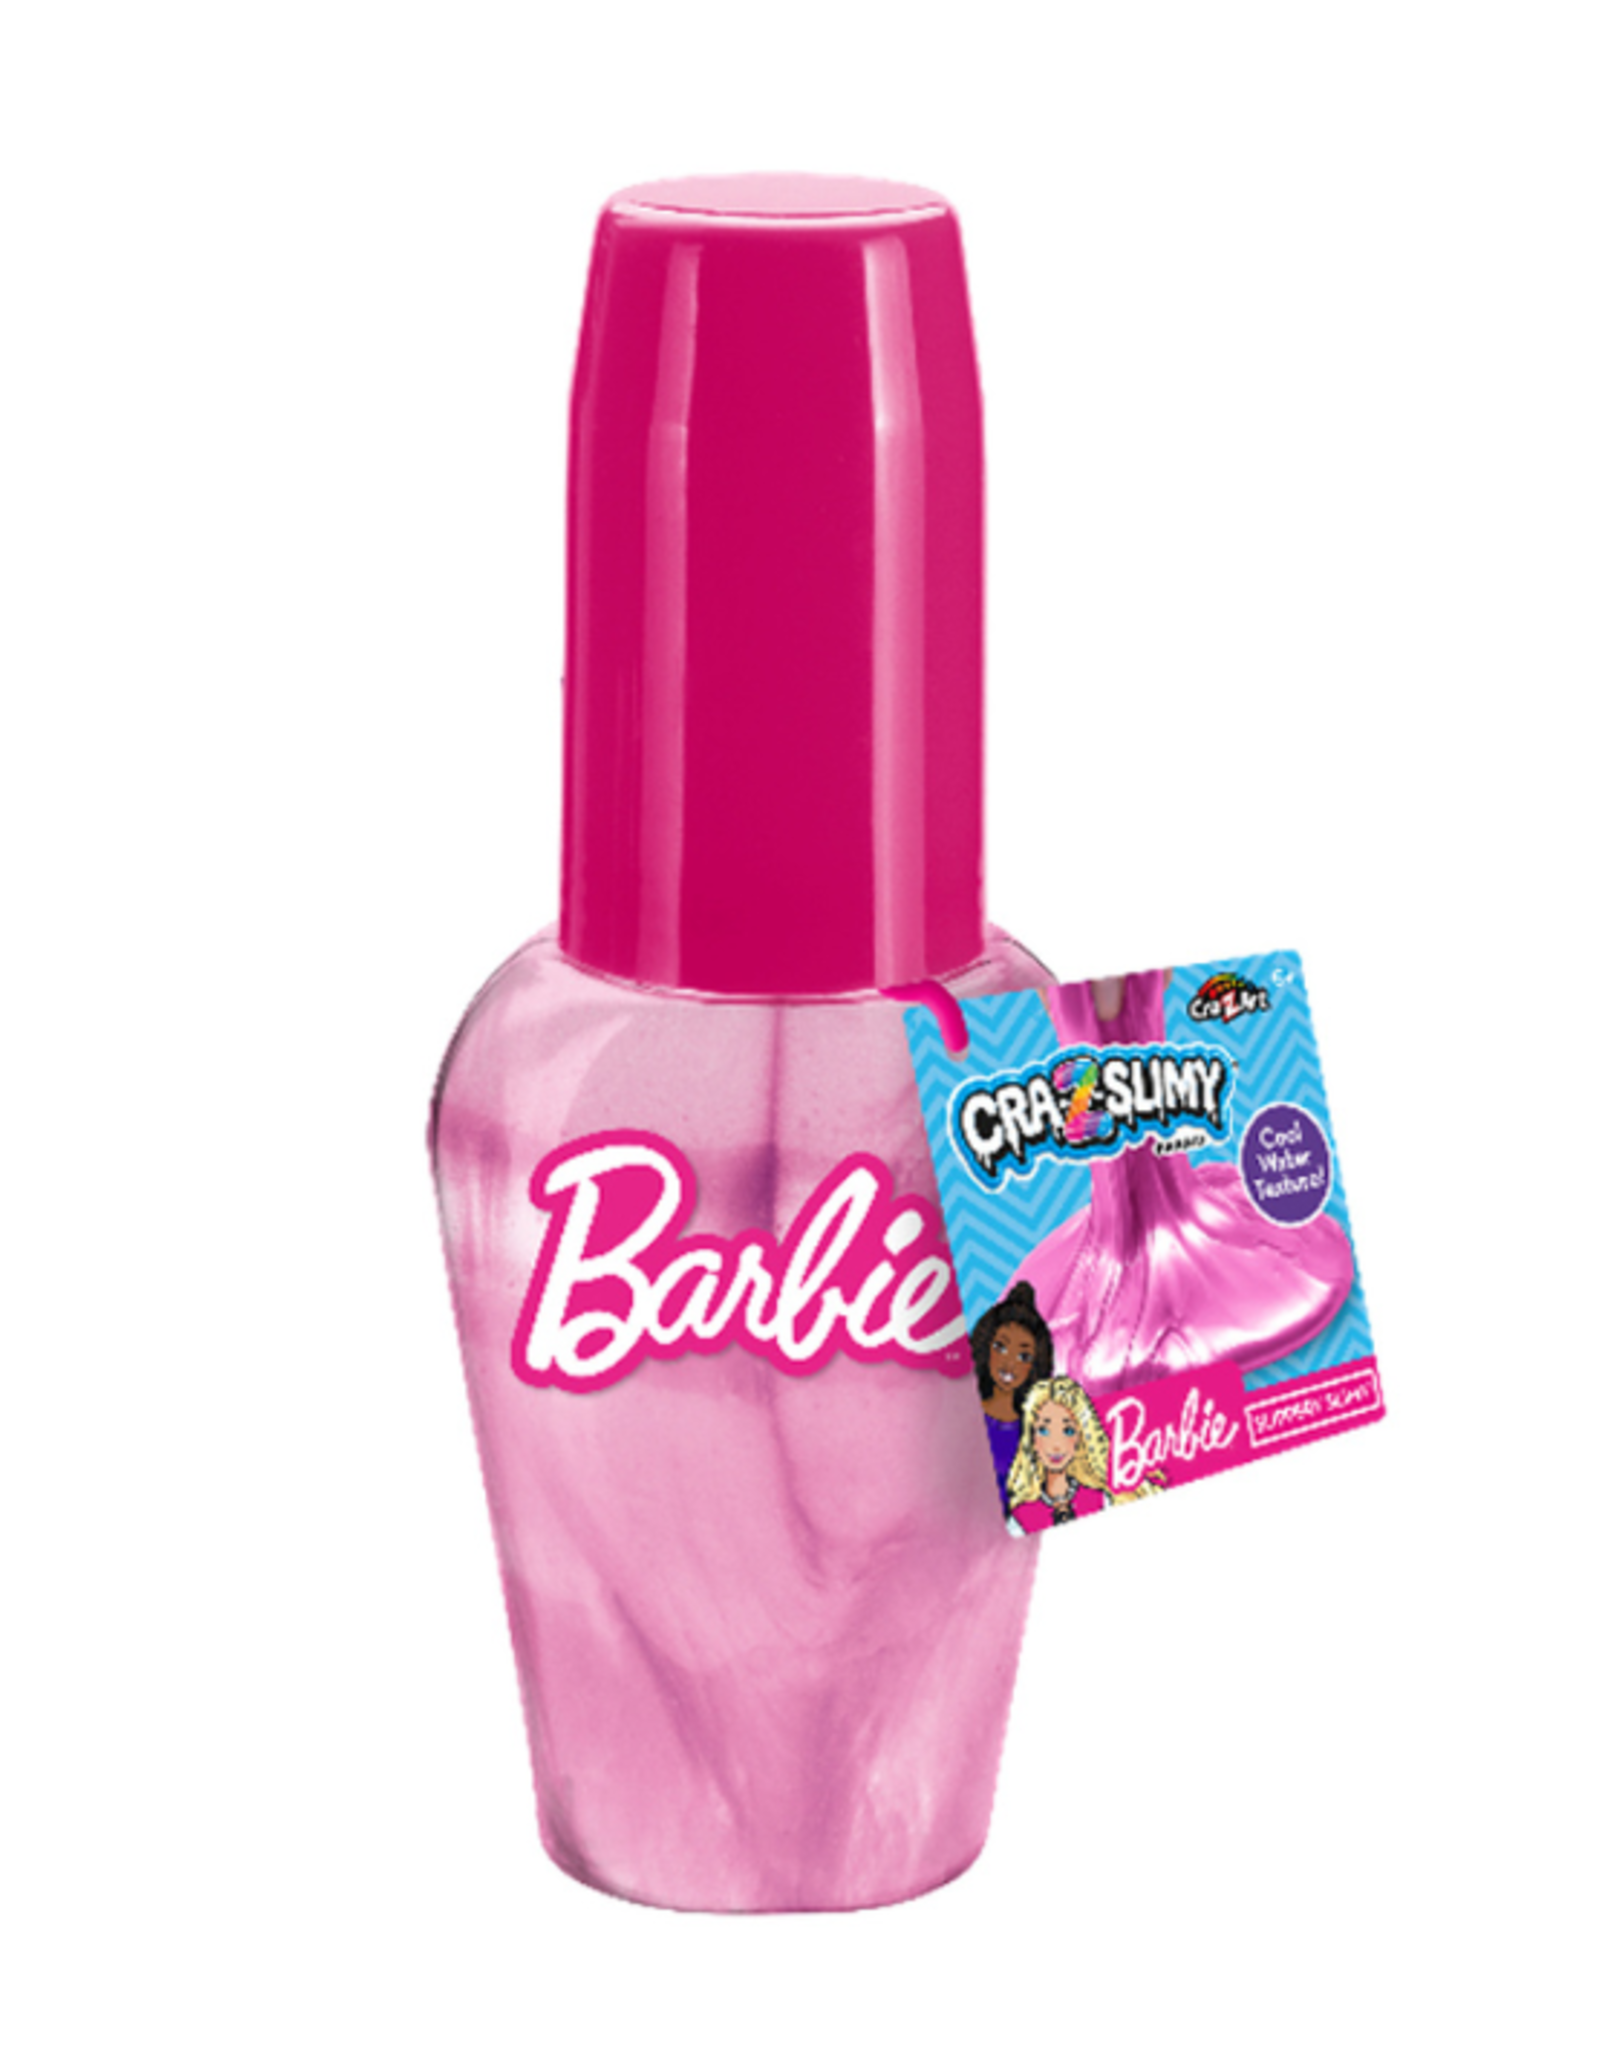 Cra-Z-Art Cra-Z-Art - Barbie Cra-Z-Slimy Nail Polish